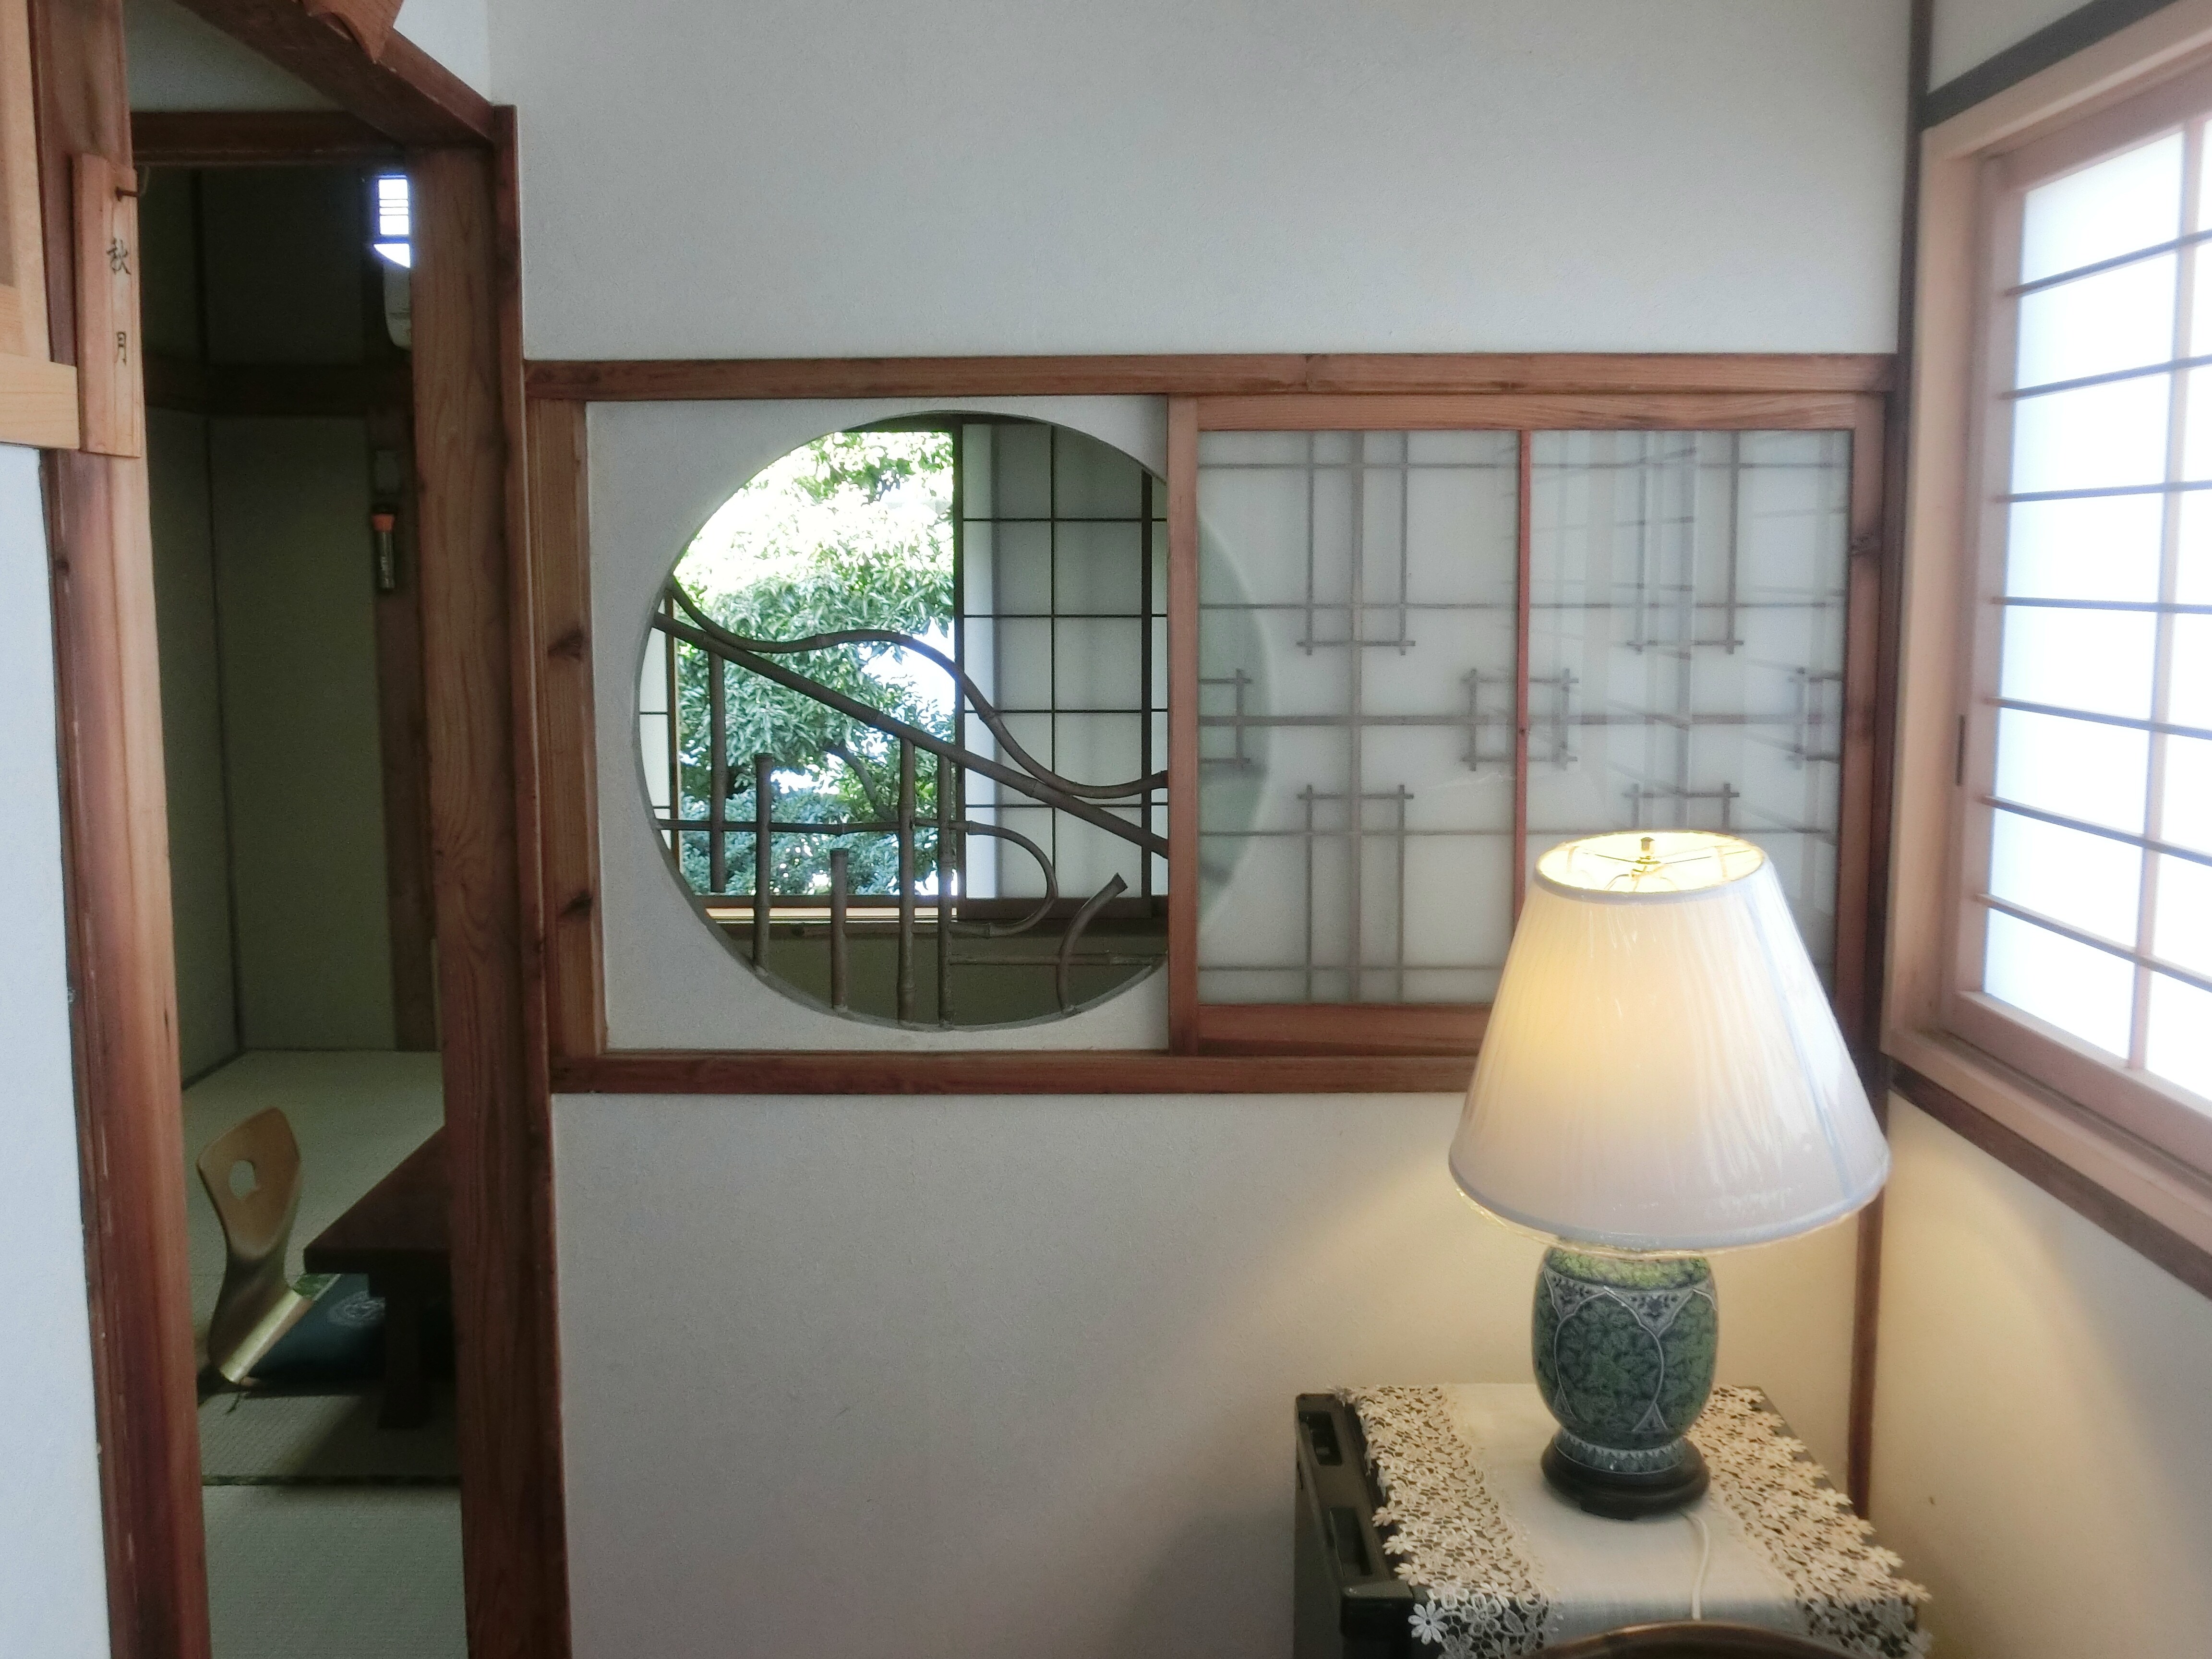 [Akizuki no Ma] It is a window of a carpenter who is a craftsman.